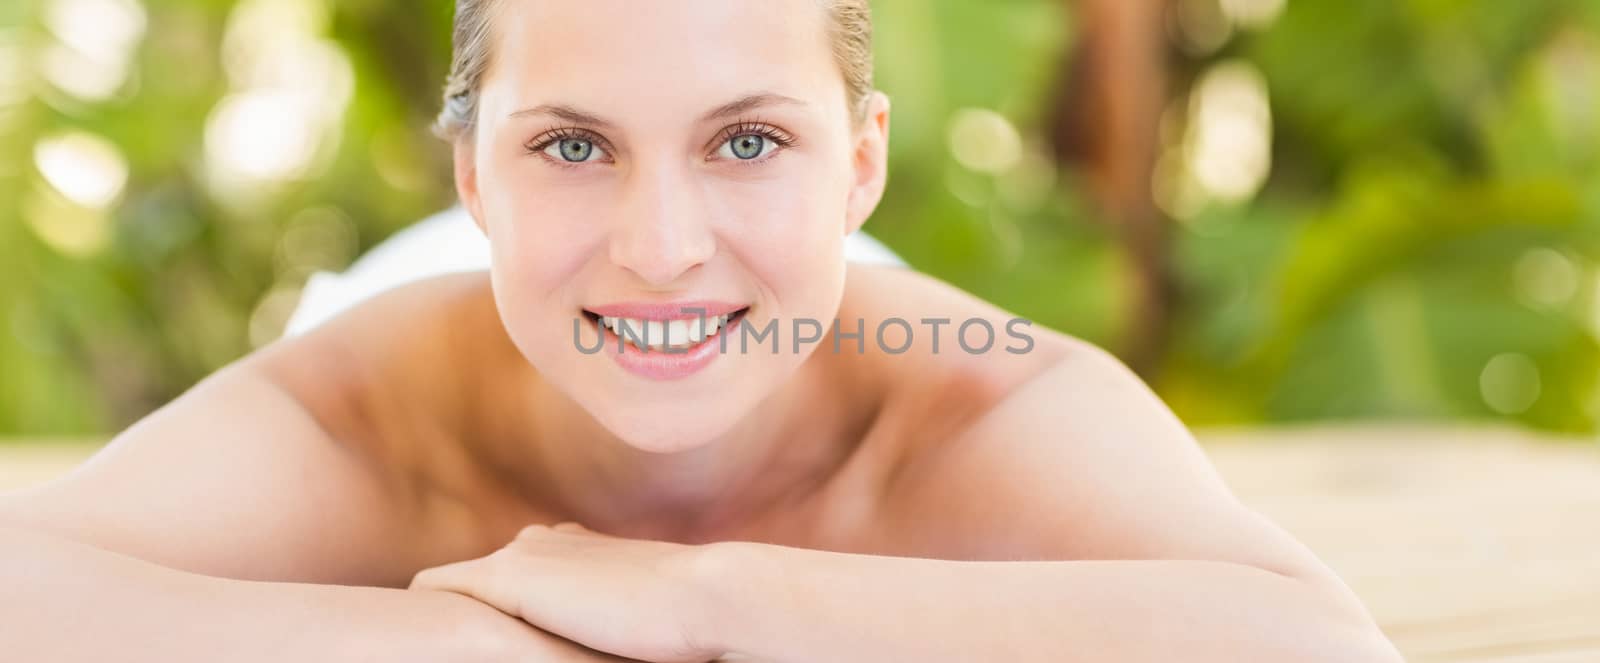 Peaceful blonde lying on towel smiling at camera  by Wavebreakmedia